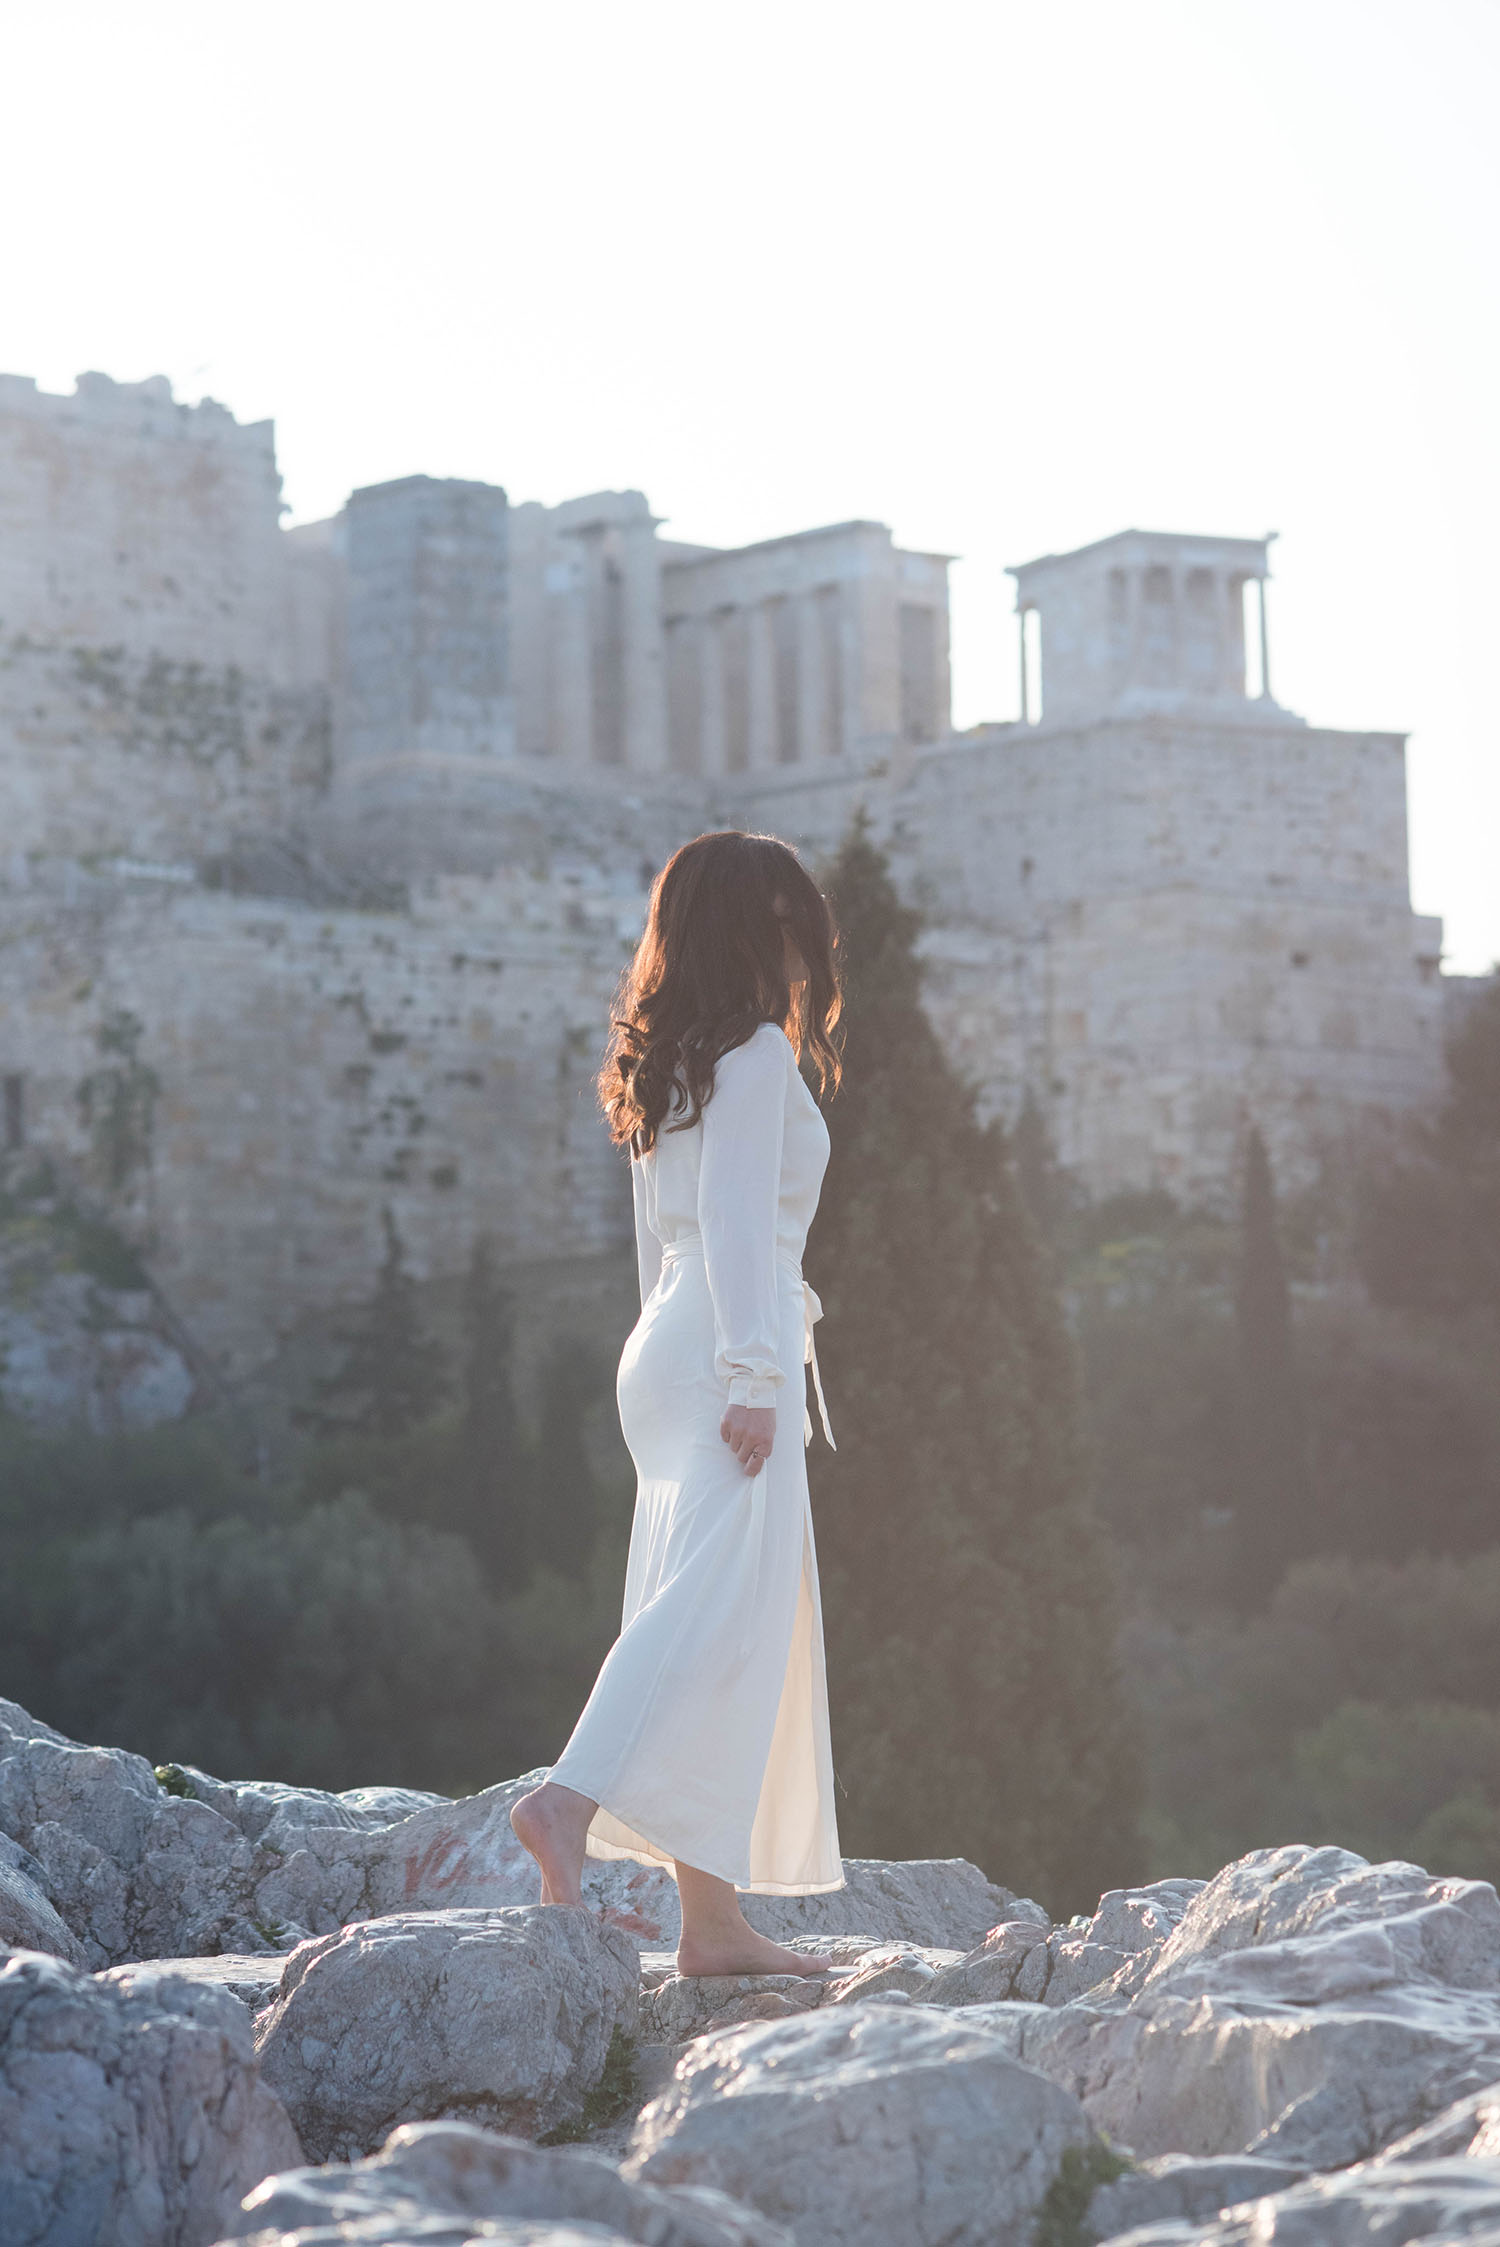 Winnipeg fashion blogger Cee Fardoe of Coco & Vera walks on a rocking outcropping near Acropolis Hill in Greece, wearing a white Lovers + Friends maxi dress